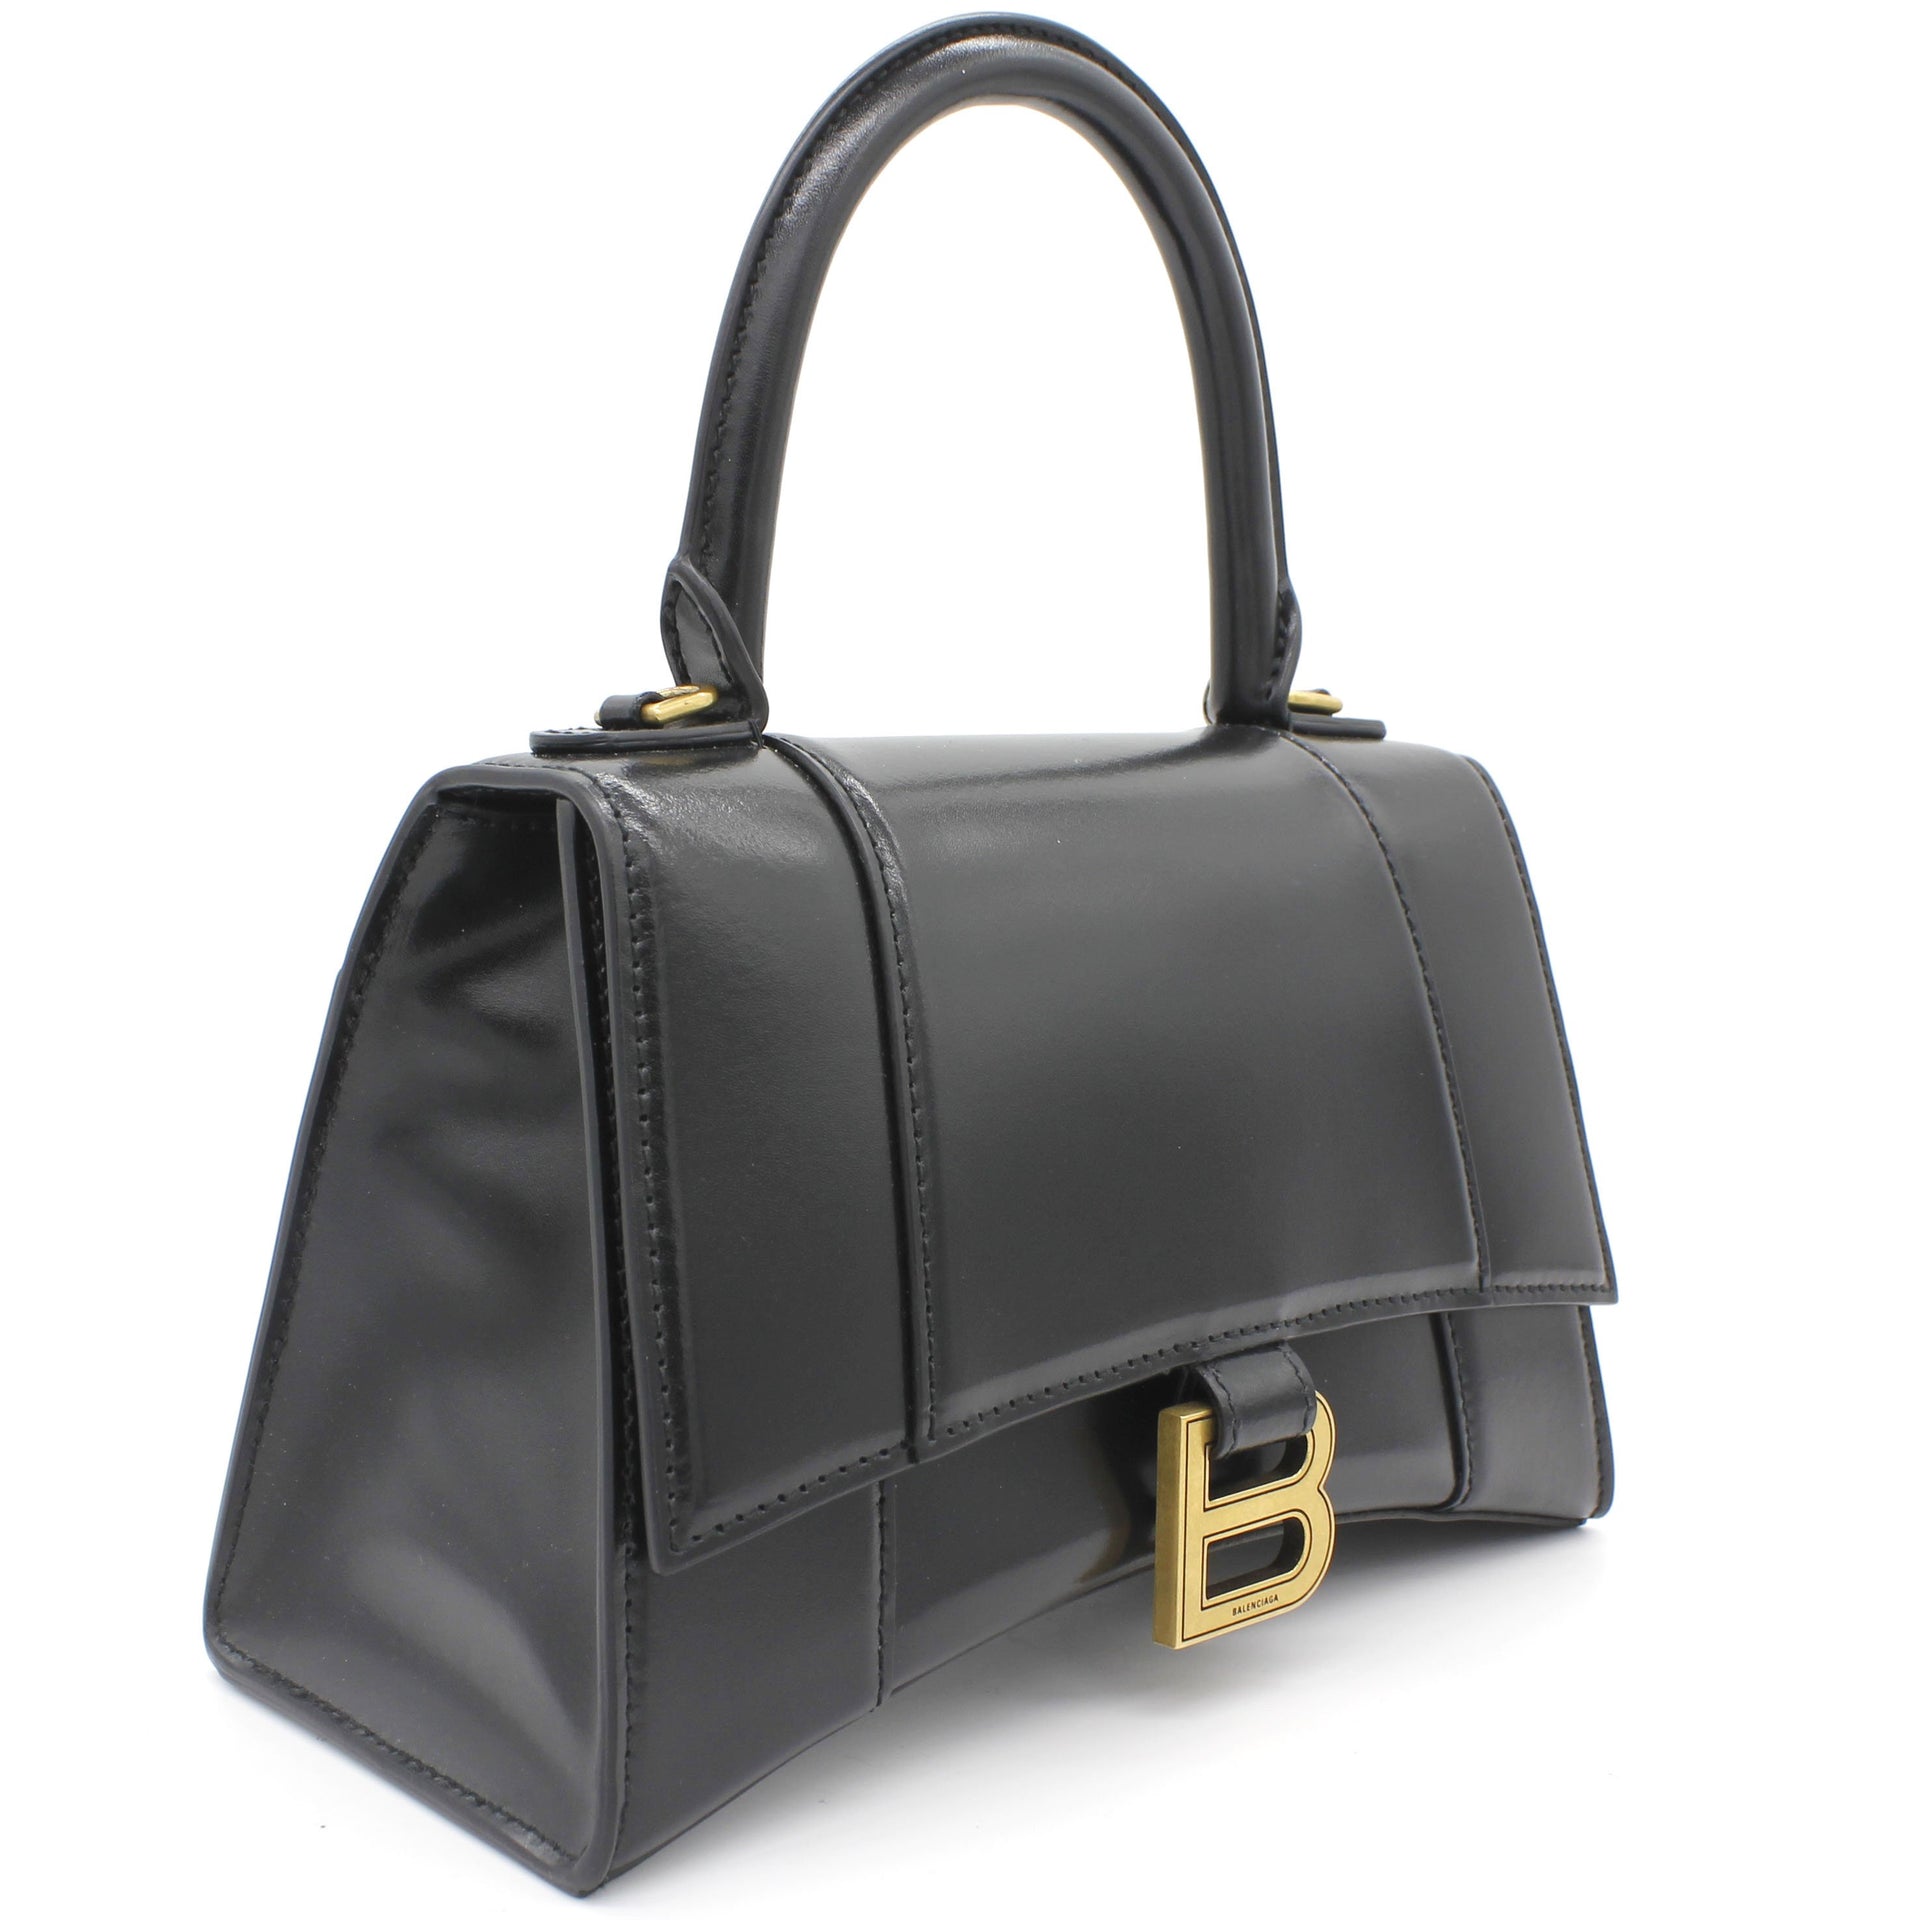 Balenciaga's Hourglass Bag Is Both Trendy And Historic